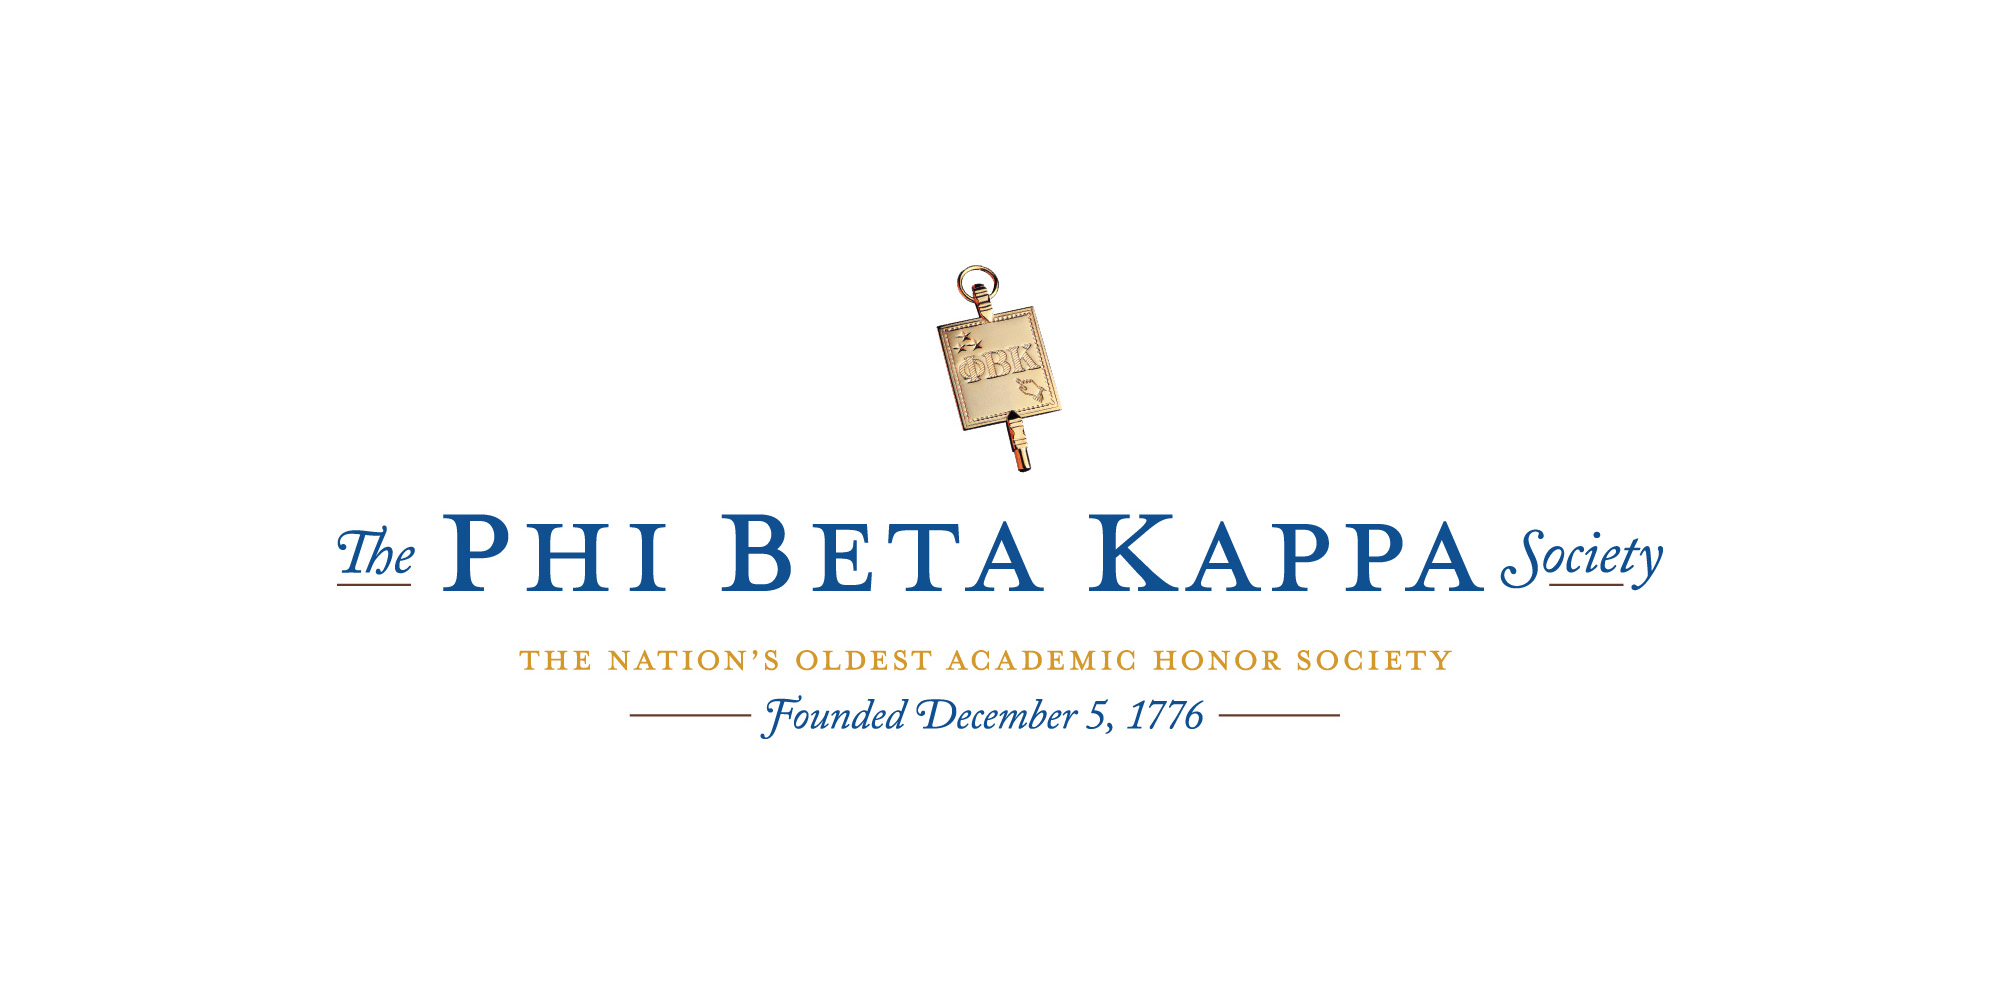 An image of the Phi Beta Kappa Society logo